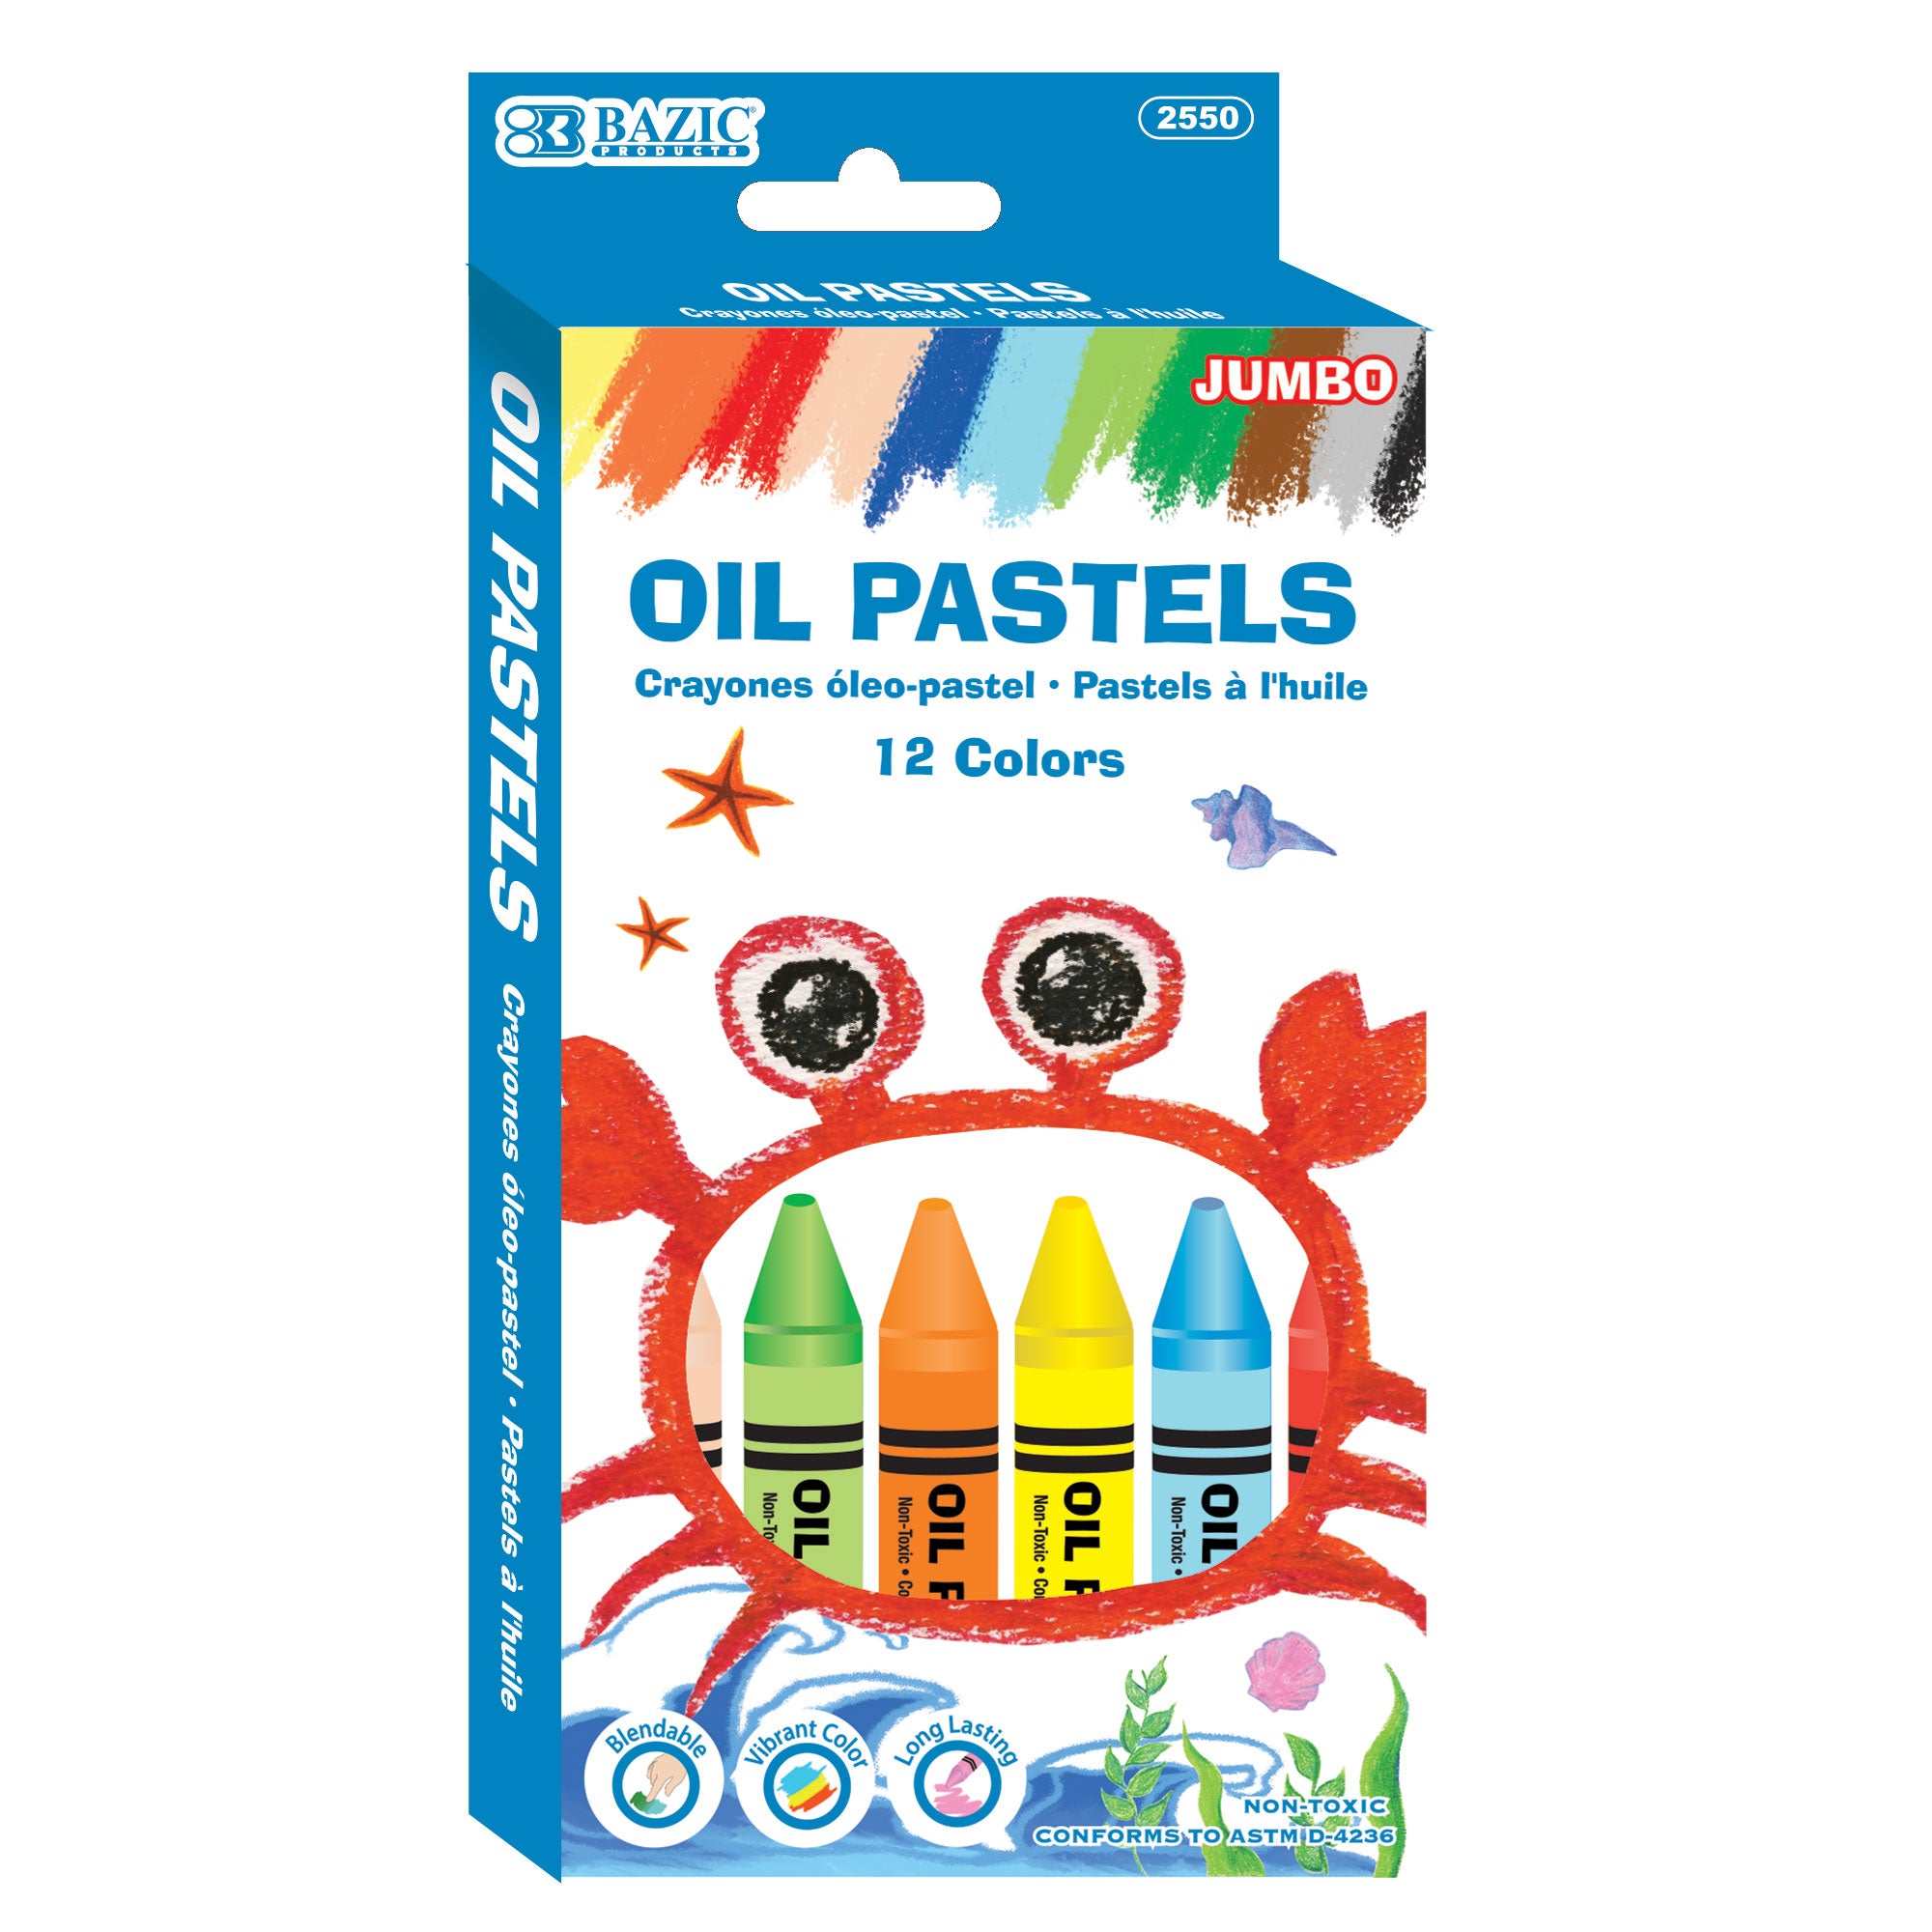 Rainbow Colored Pencils - Brilliant Promos - Be Brilliant!